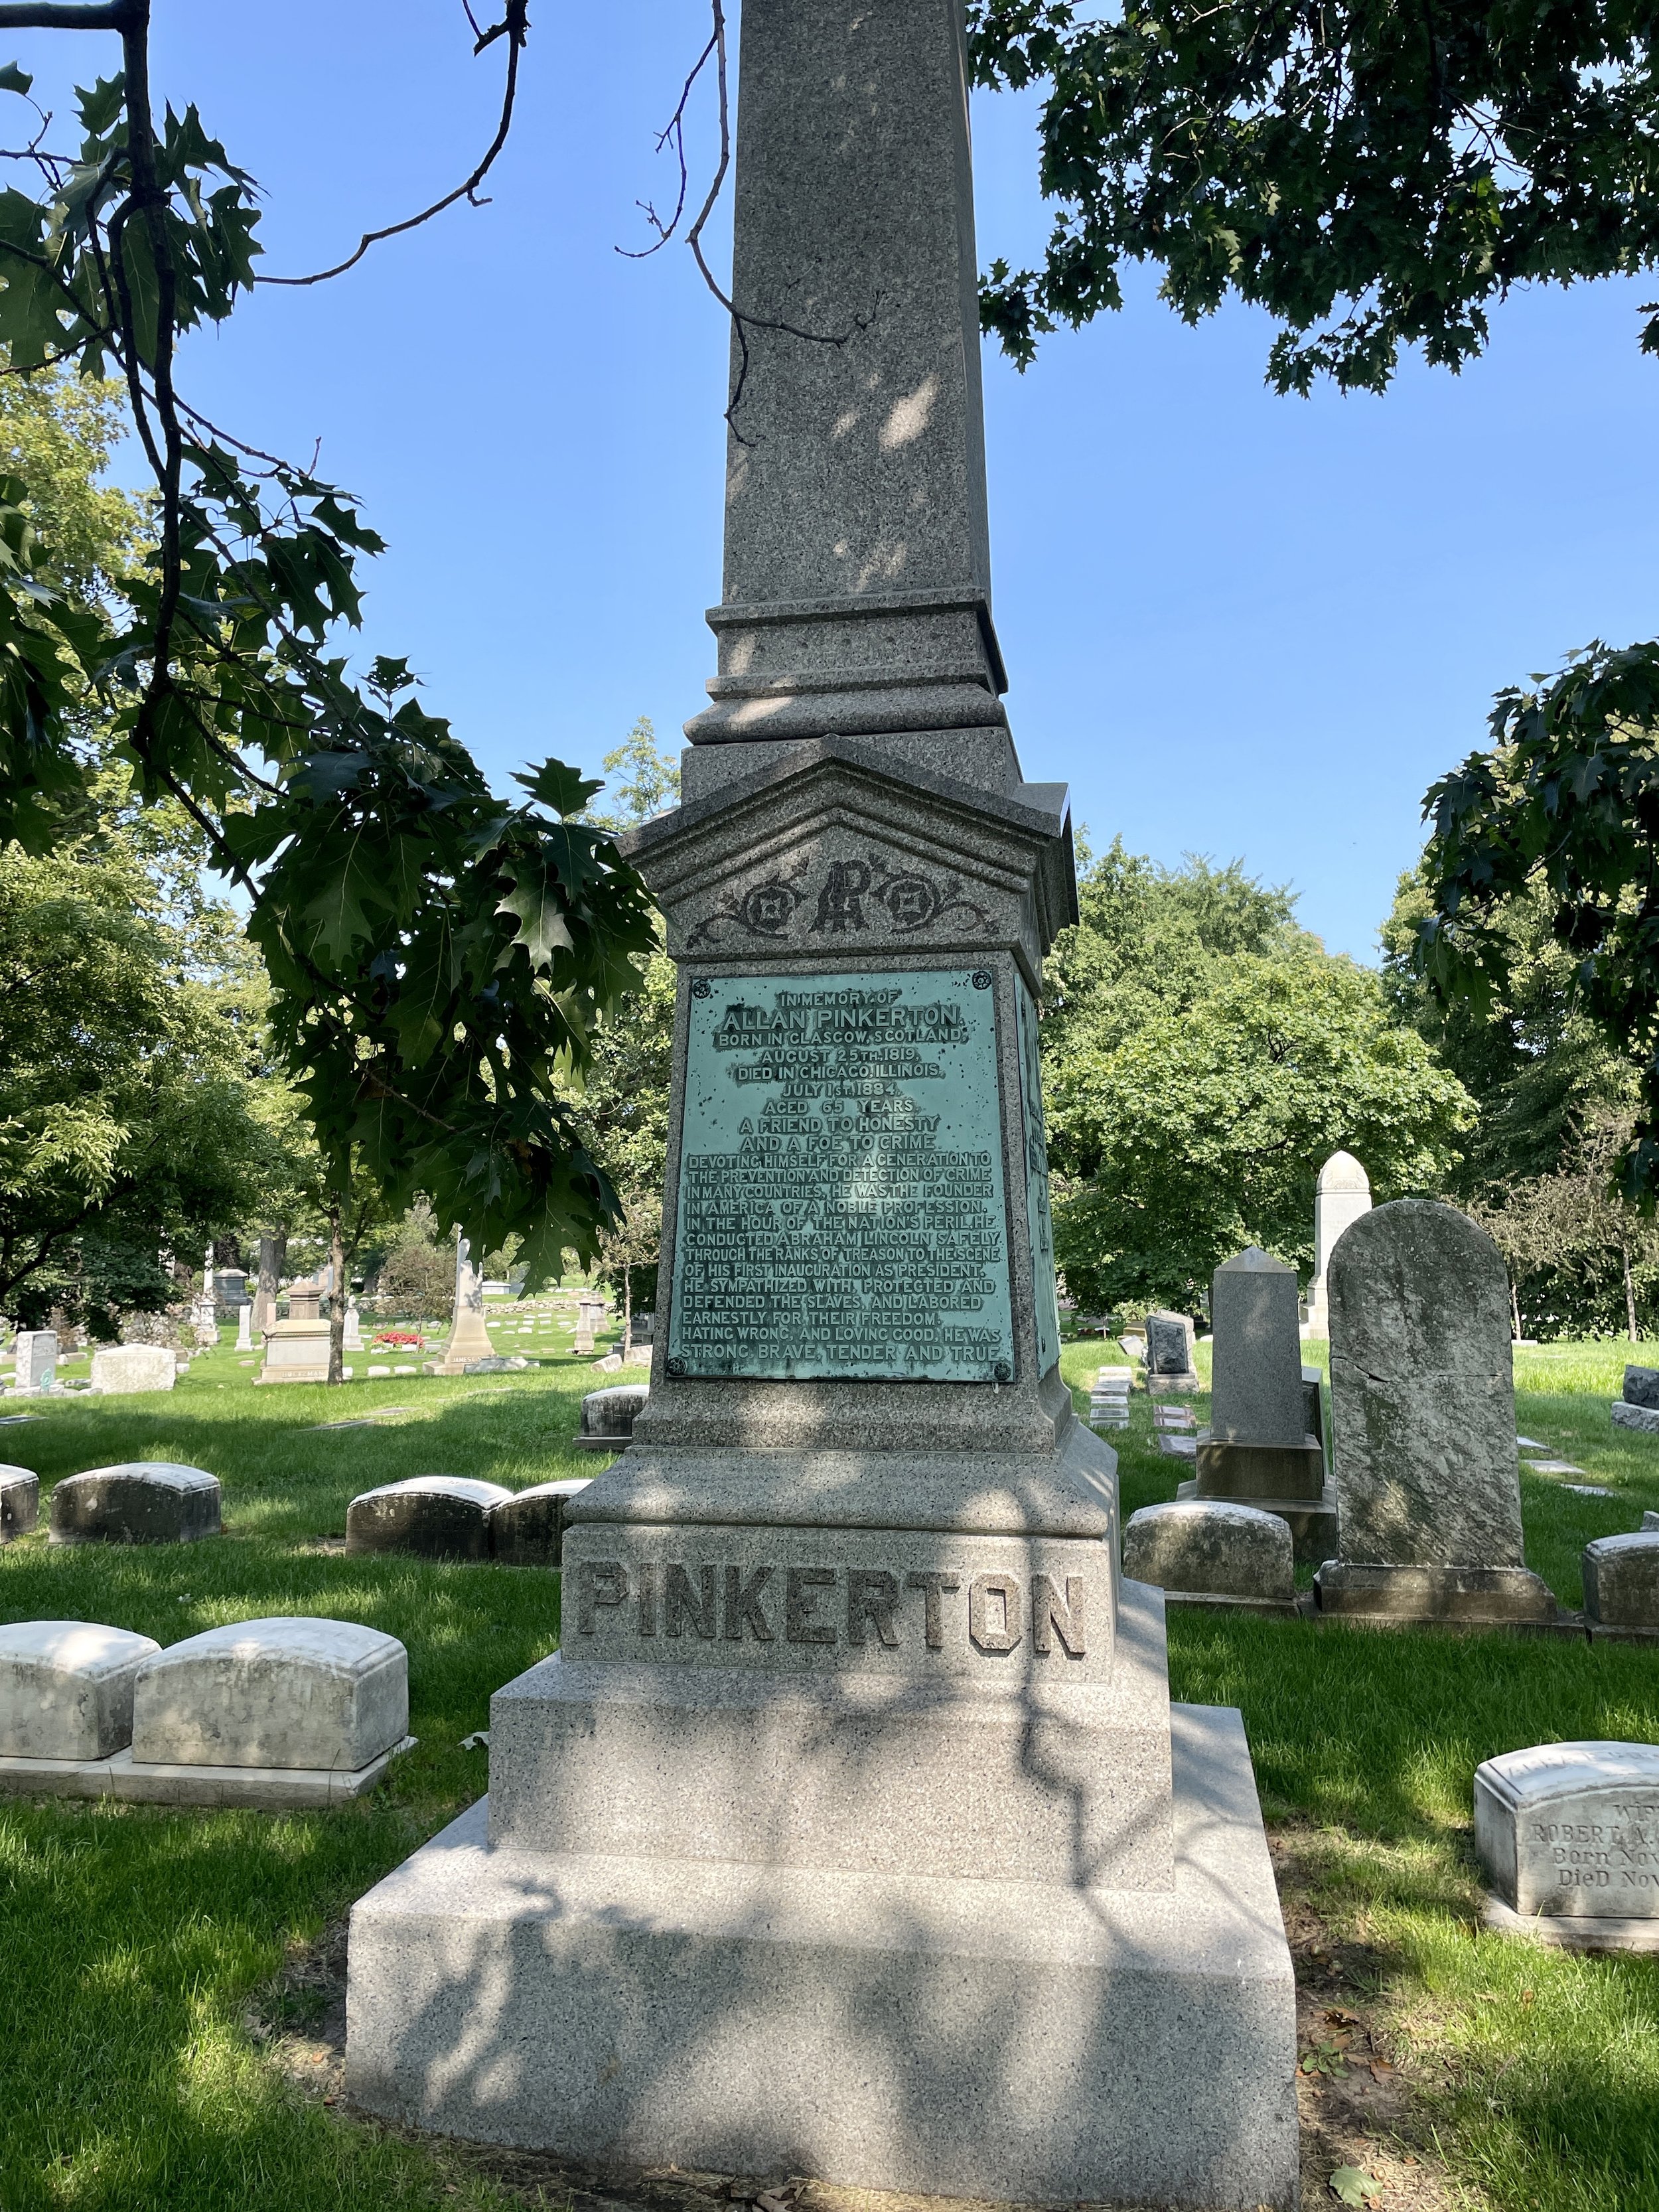 The Pinkerton Column